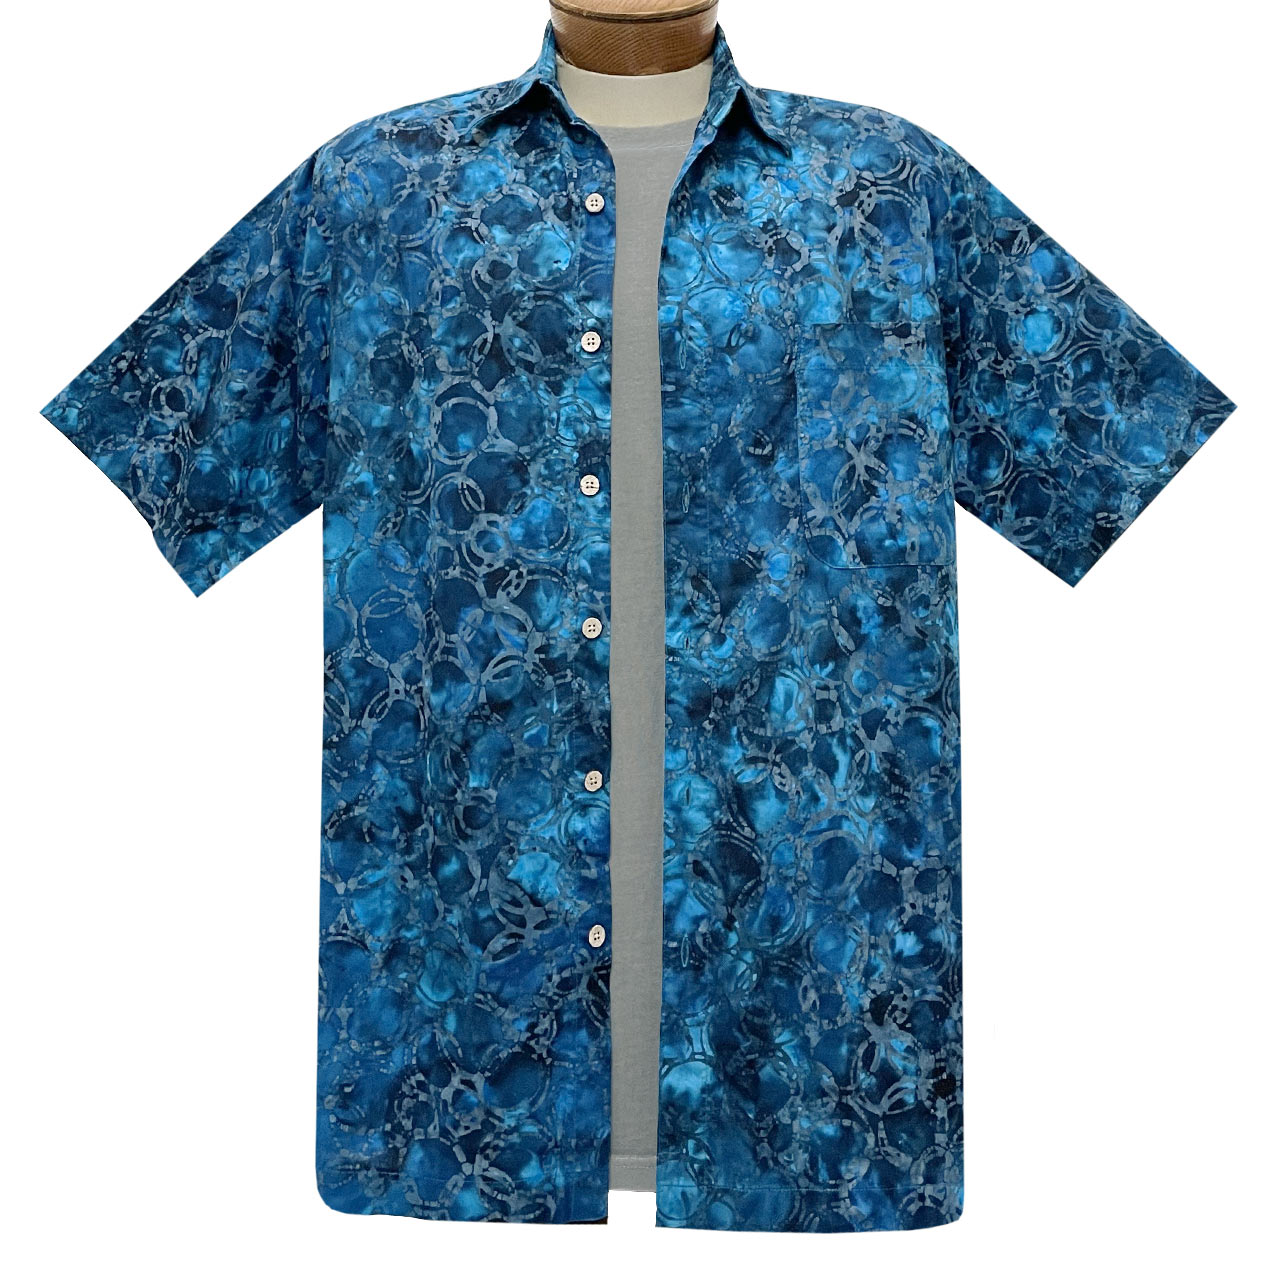 Men's R. Options Batik Short Sleeve Cotton Aloha Shirt, Blue Rings #62240-3 Deep Ocean Blue